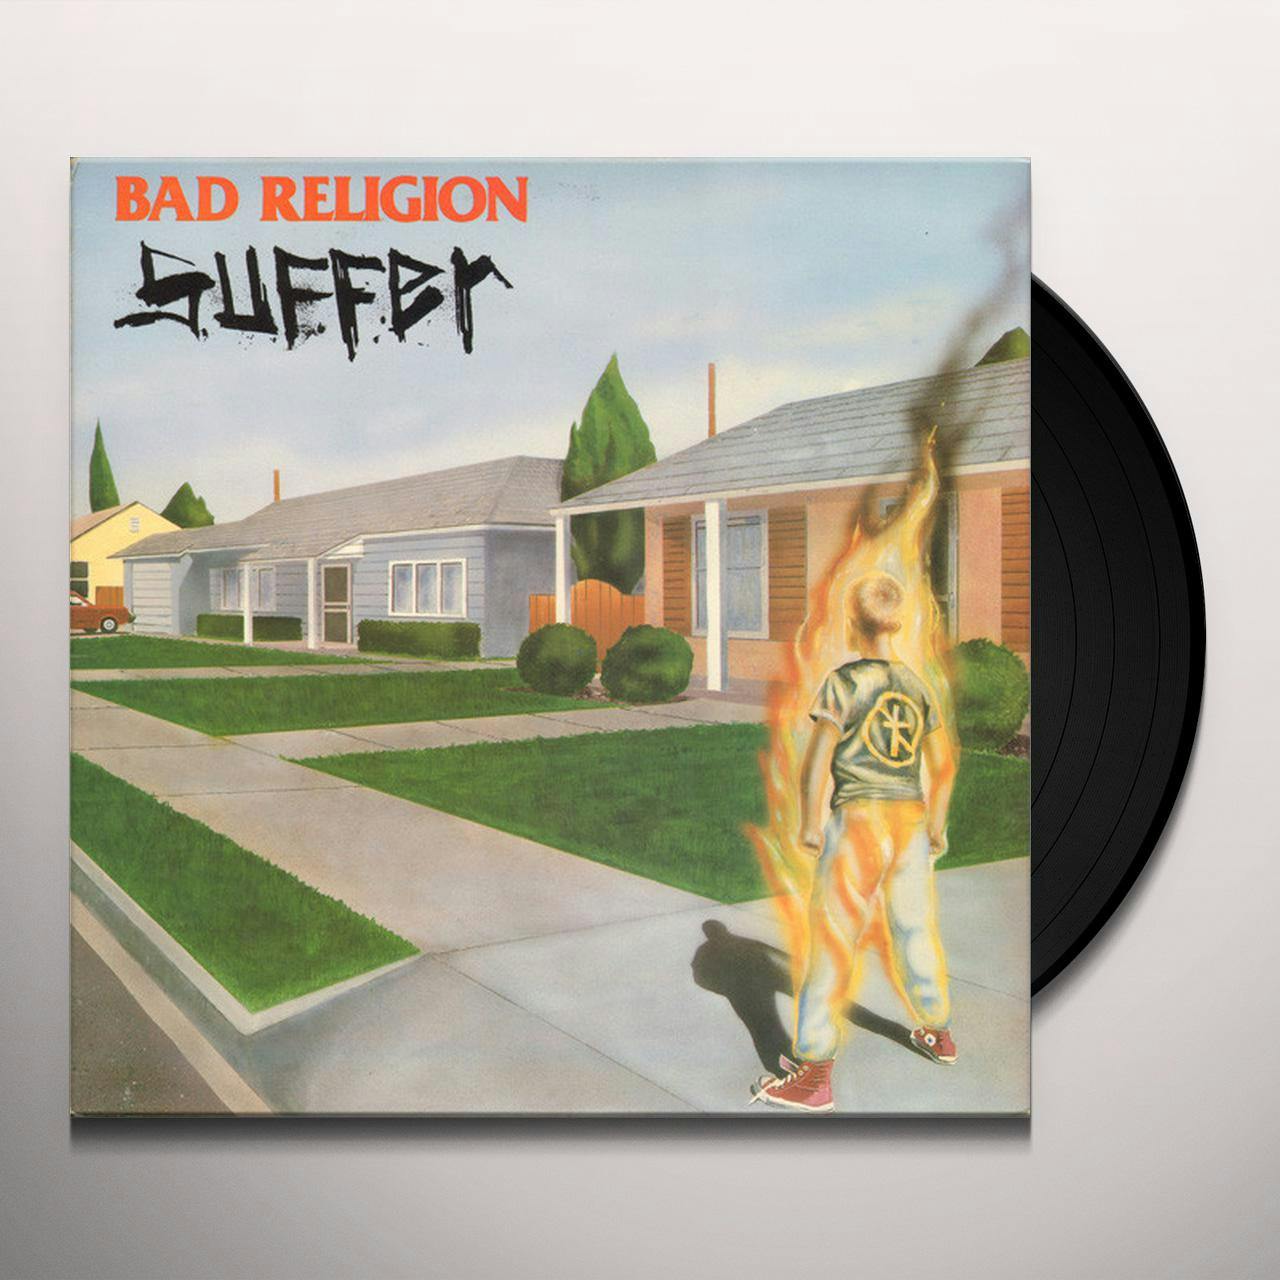 Bad Religion Suffer Vinyl Record